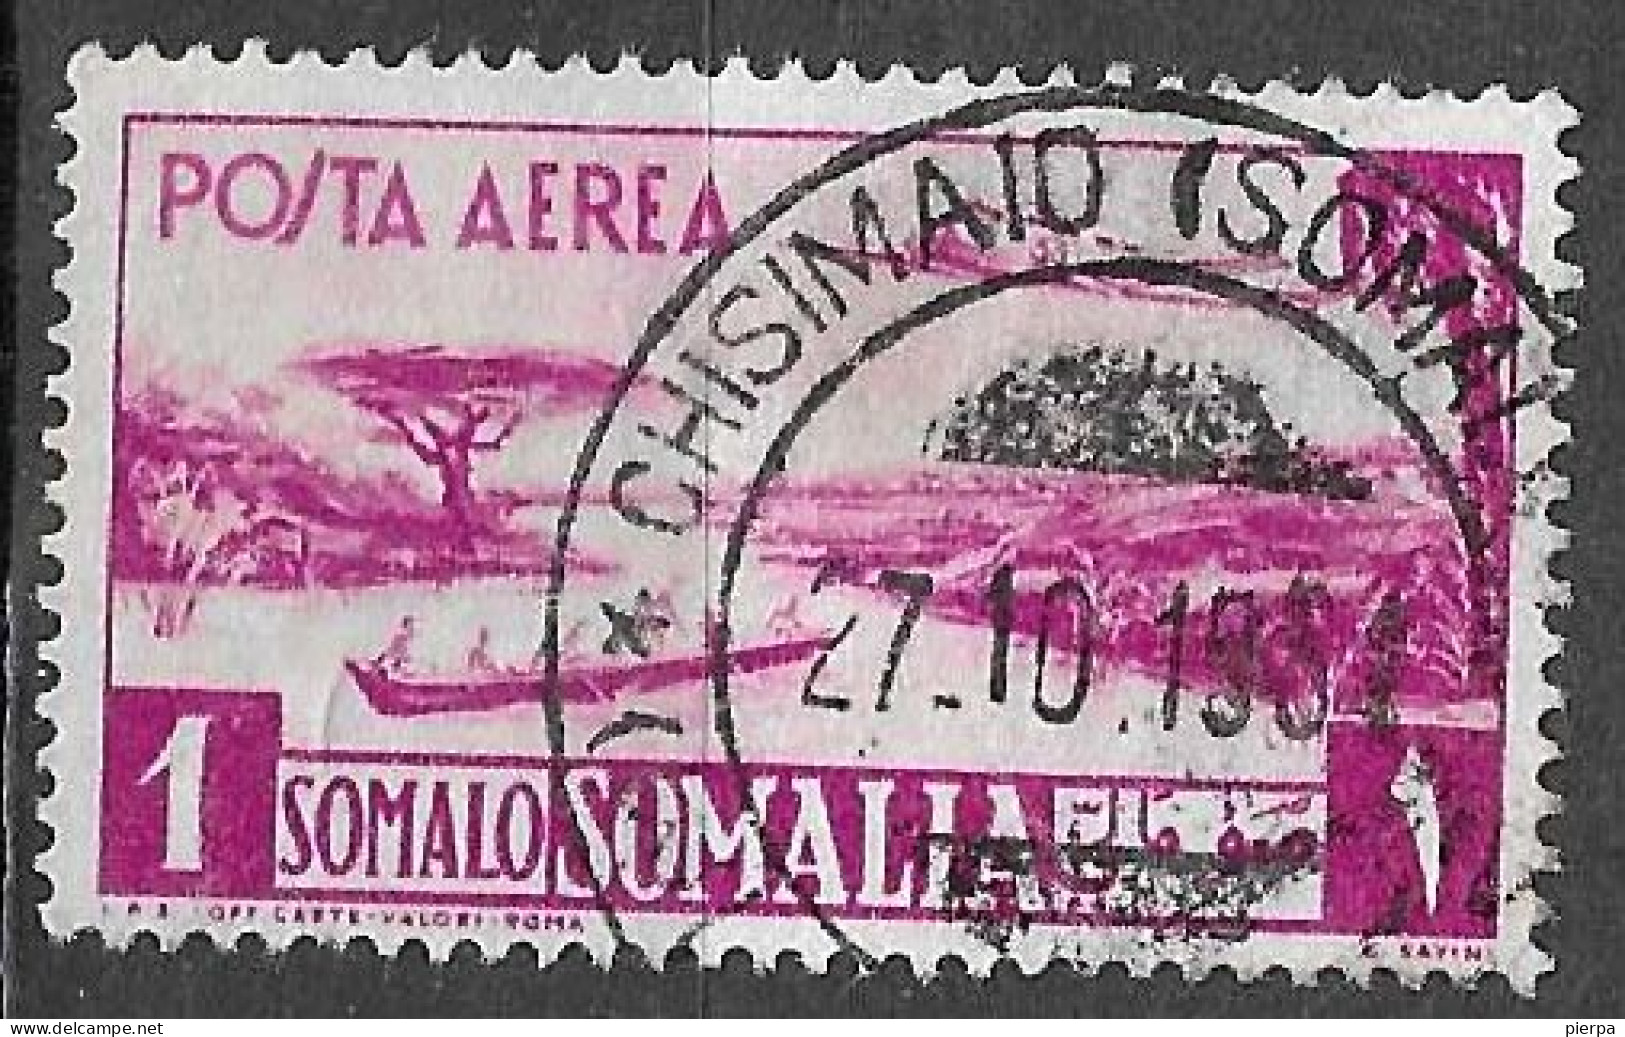 SOMALIA A.F.I.S. - 1950 - POSTA AEREA - 1 SOMALI - USATO (YVERT AV 35 - MICHEL 260 - SS A 6) - Somalië (AFIS)